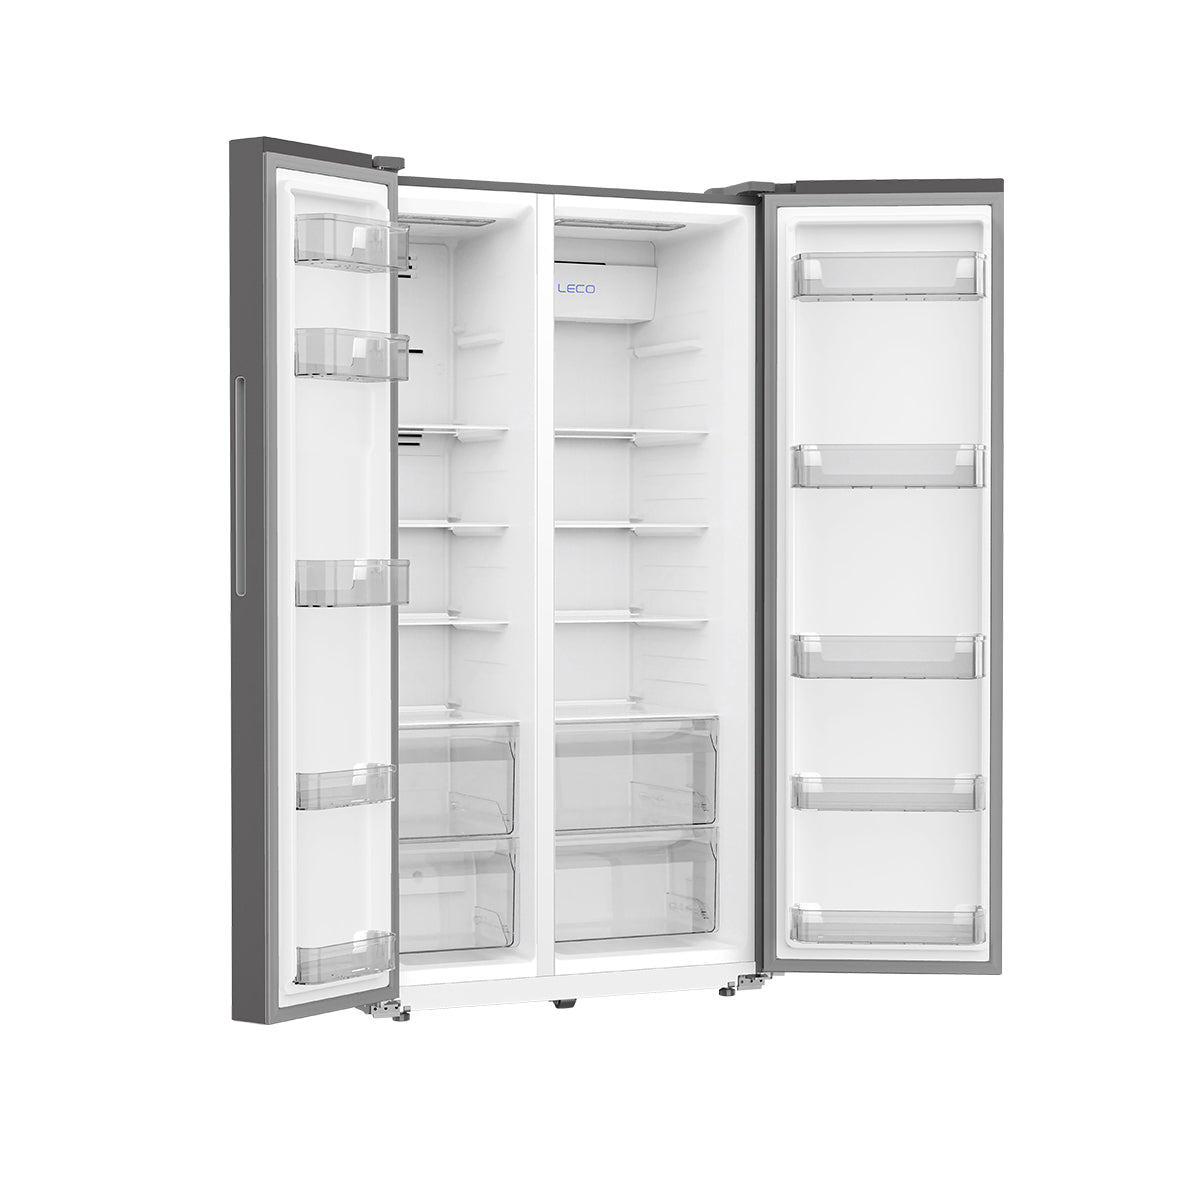 22.0 cu. ft Side by Side Inverter Series Refrigerator